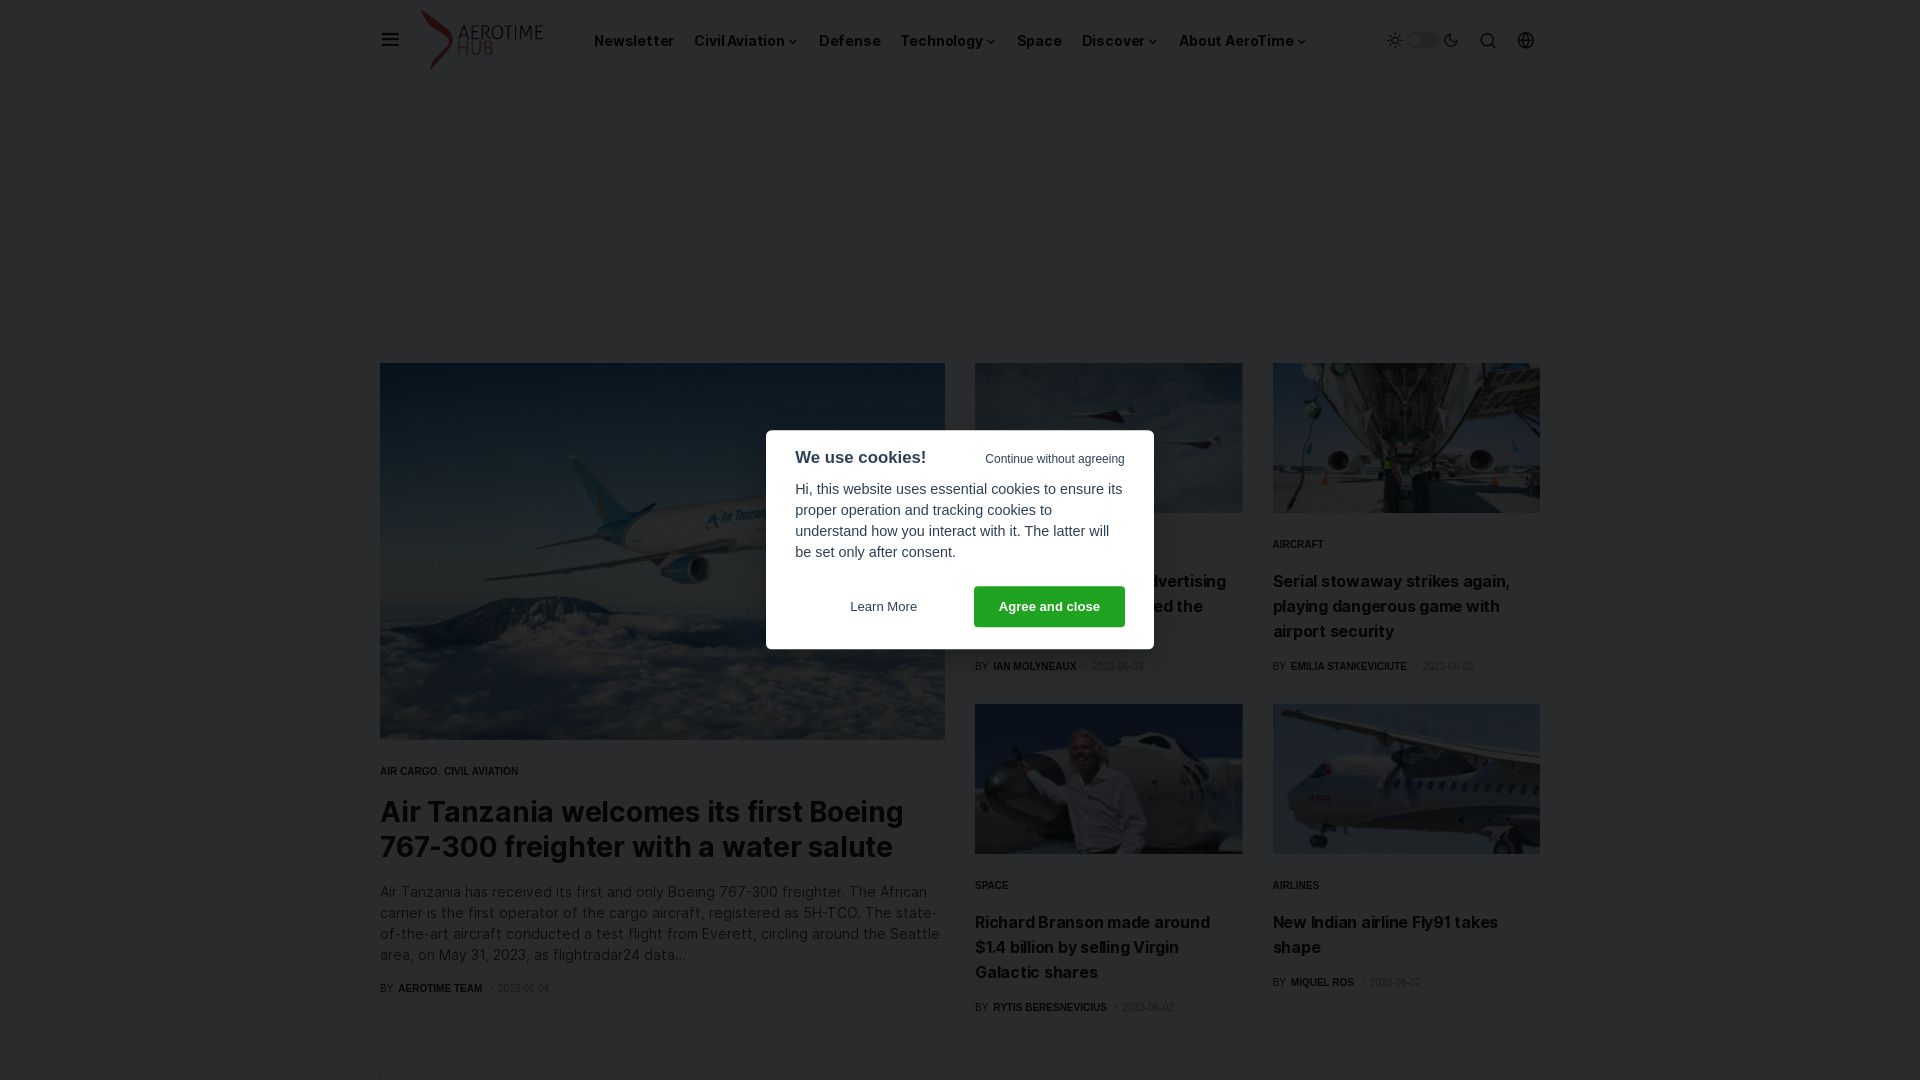 Website status aerotime.aero is   ONLINE